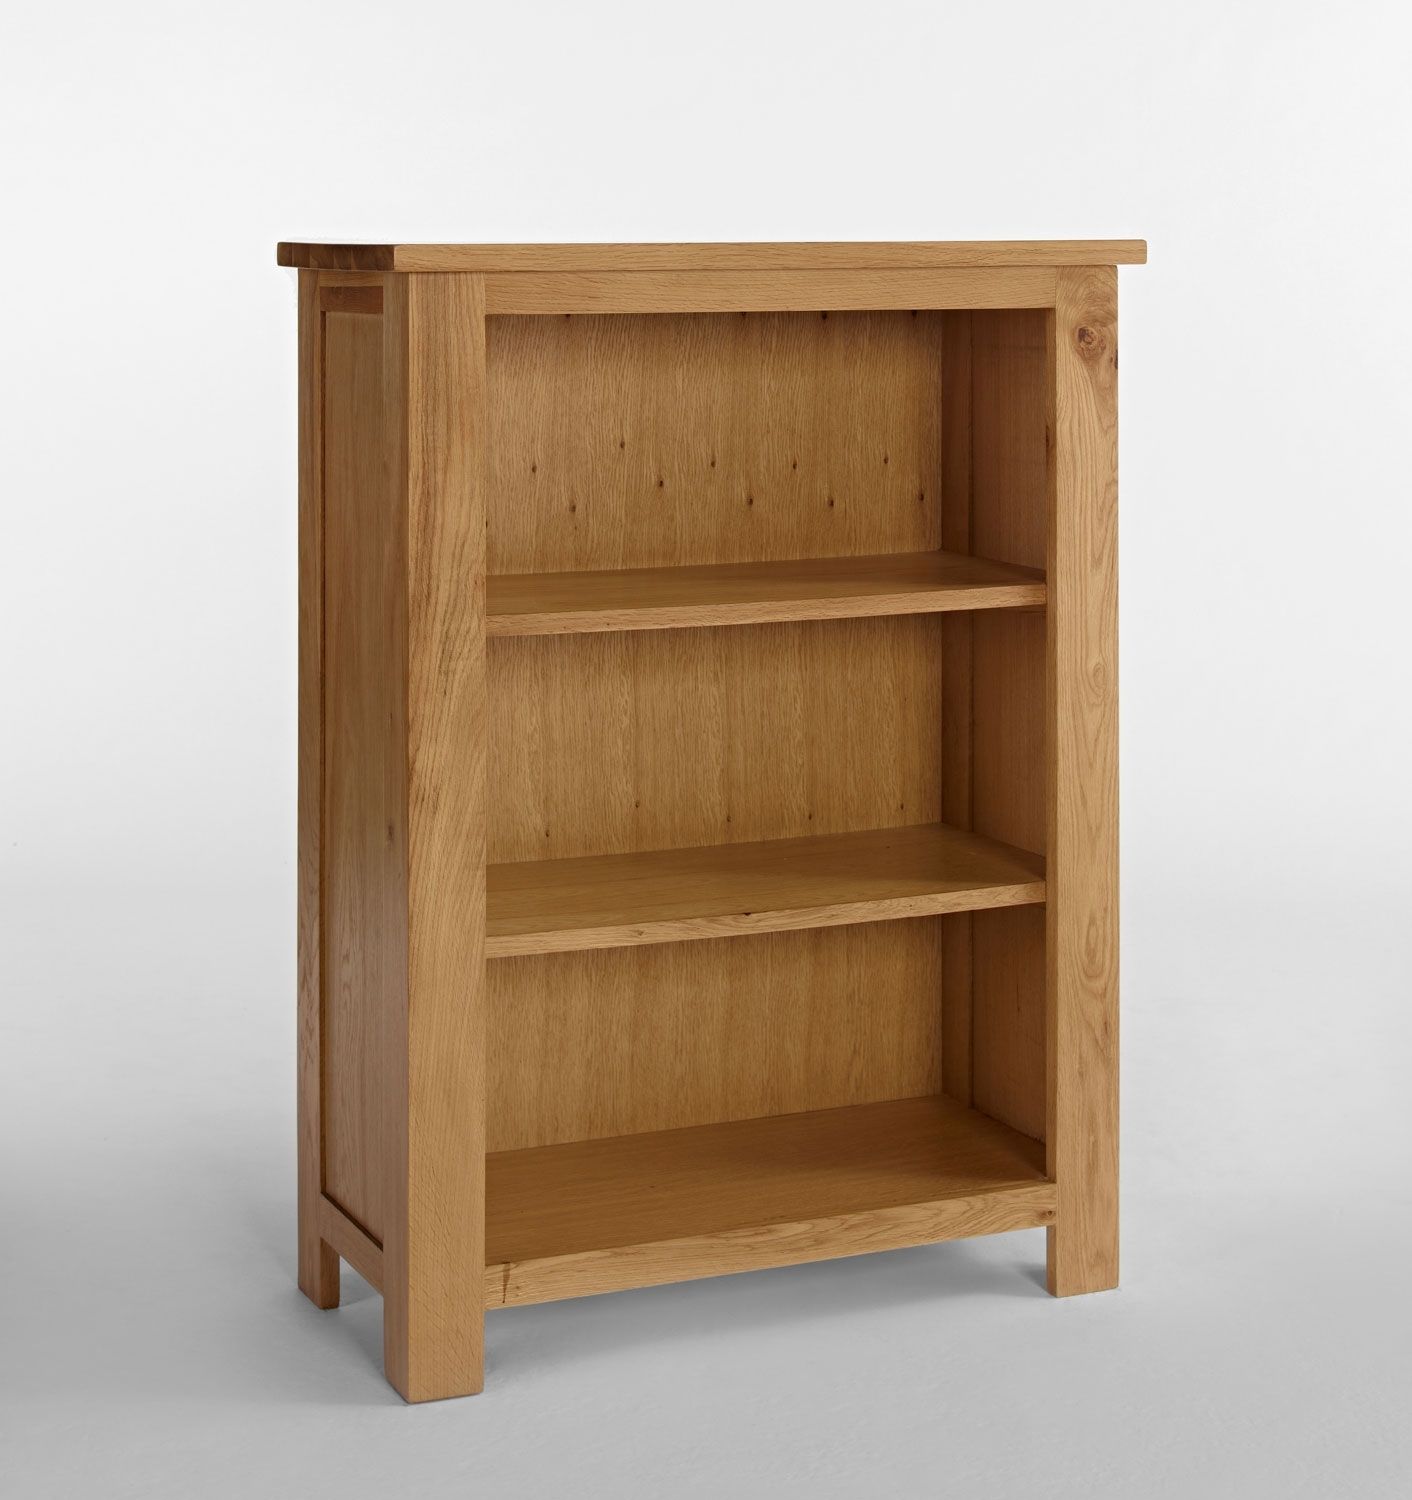 Contemporary Oak Bookcase Ecormin With Regard To Contemporary Oak Shelving Units (Photo 10 of 15)